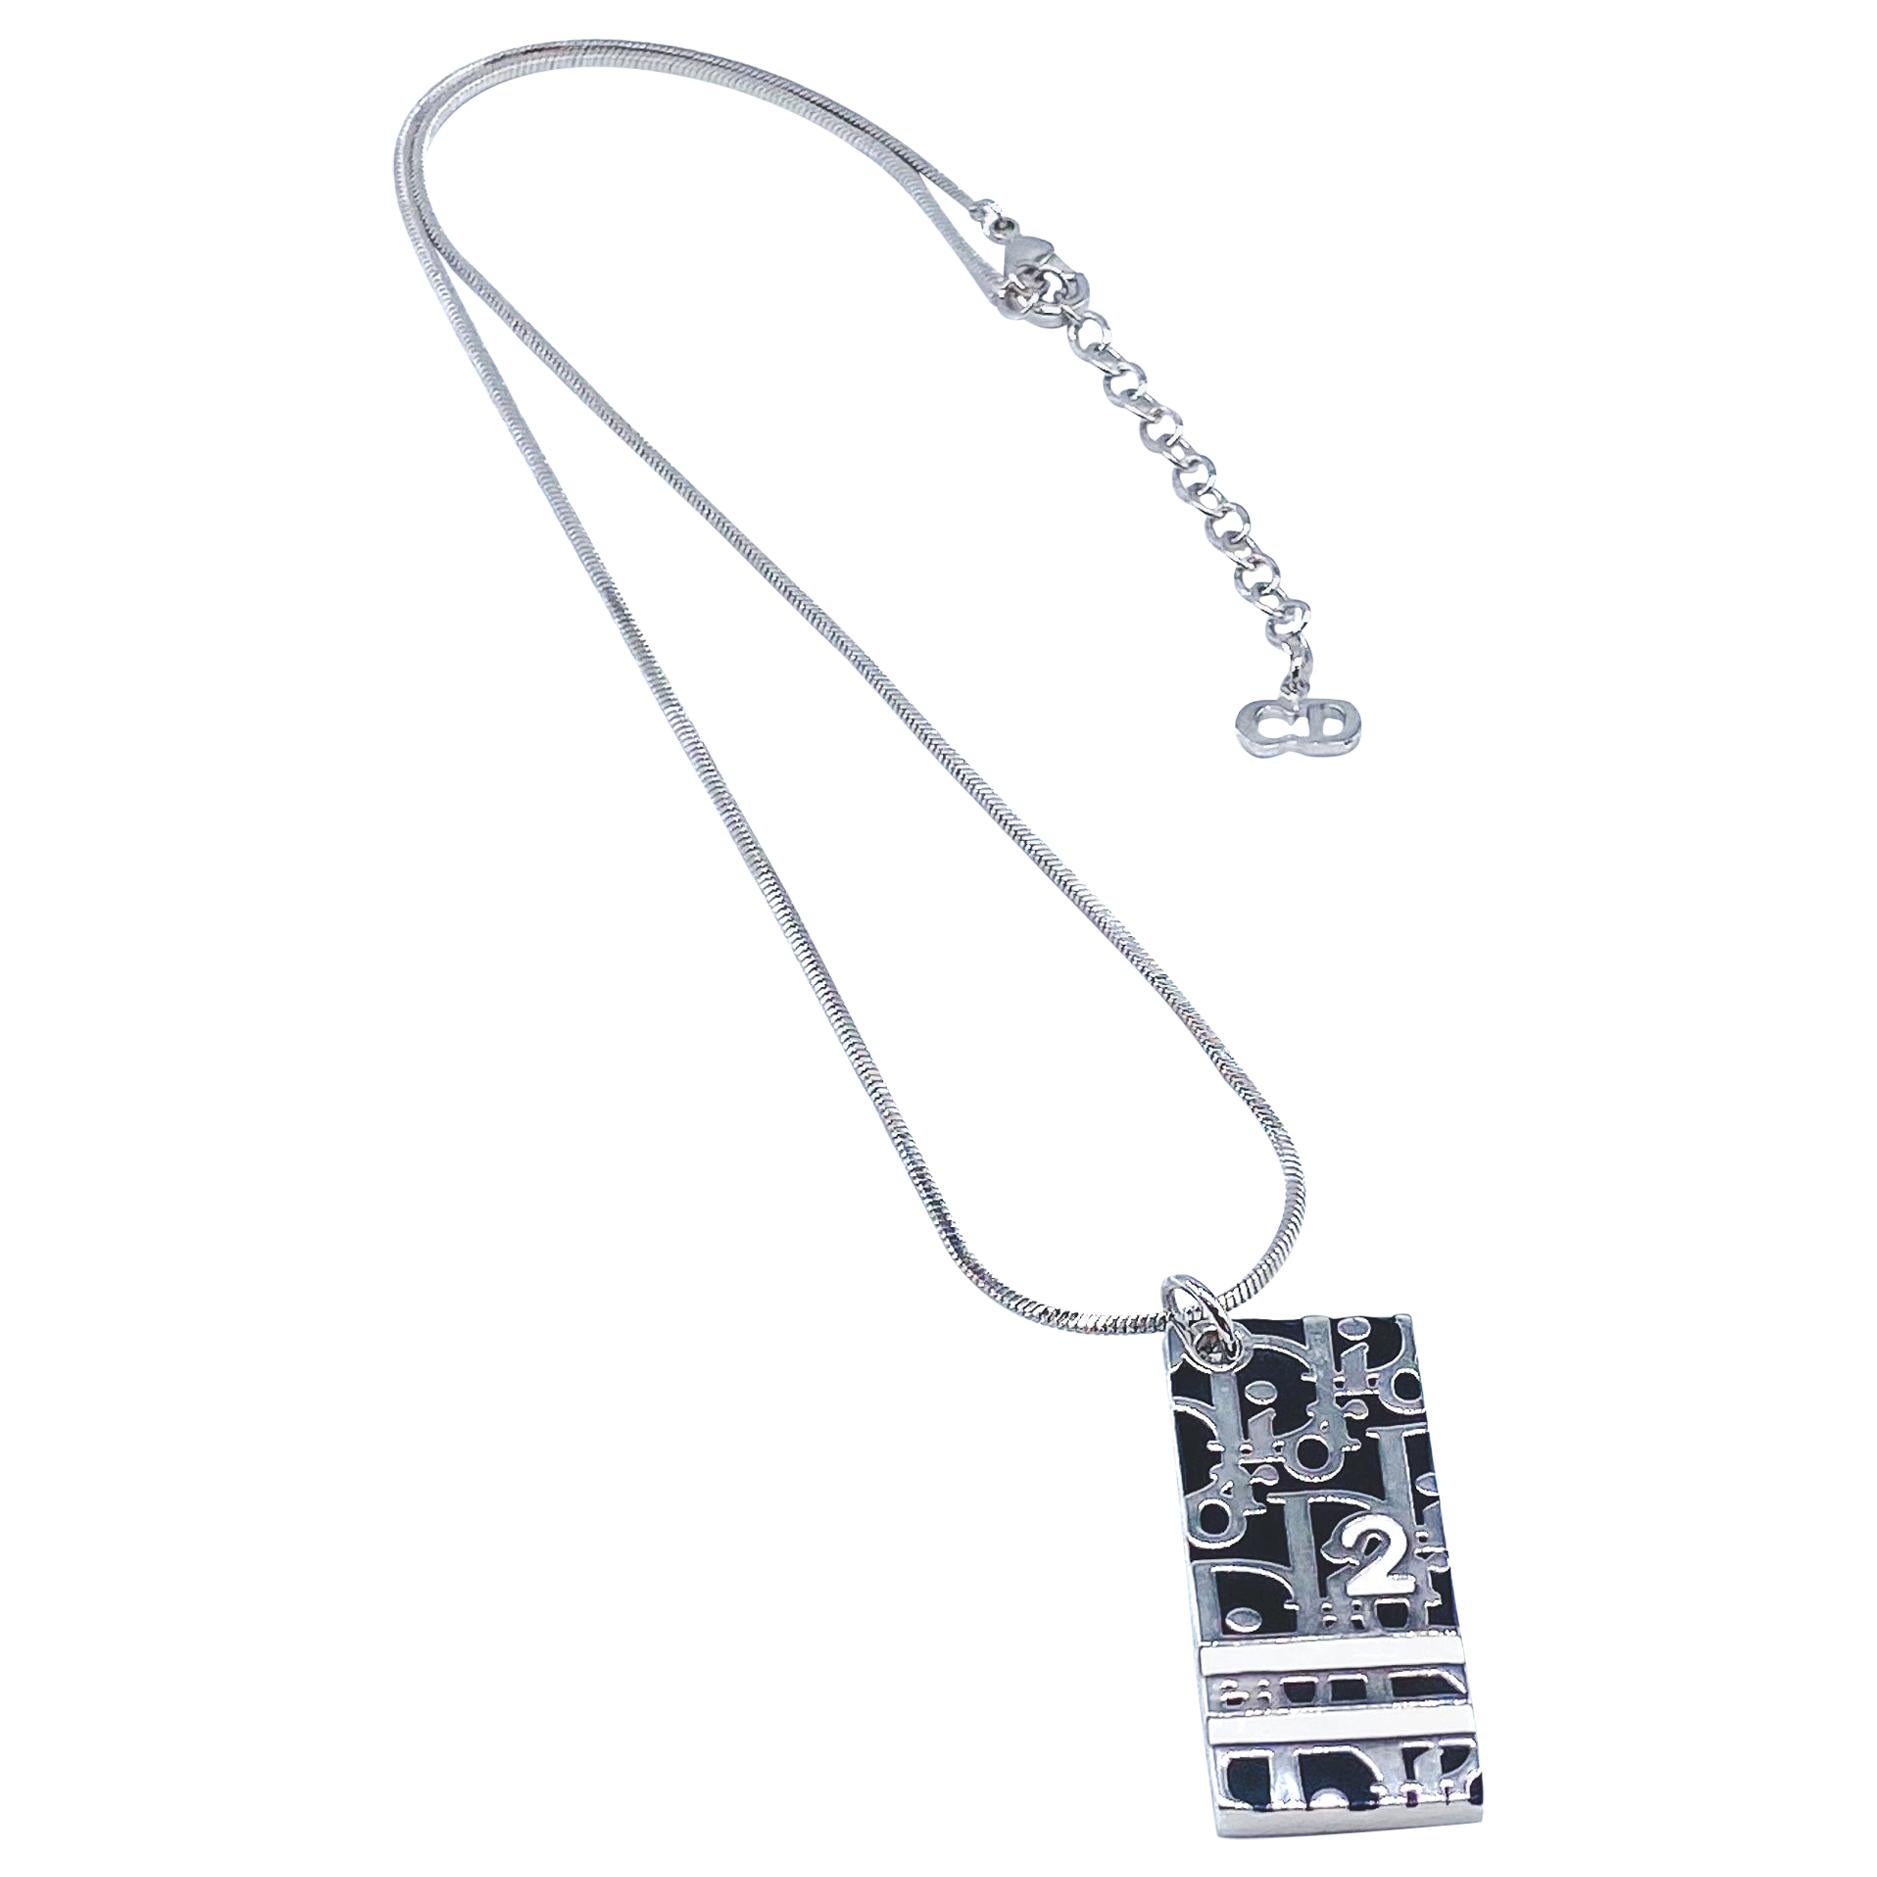 Vintage Christian Dior Curb Chain Link Gemstone Station Necklace 36034   eBay